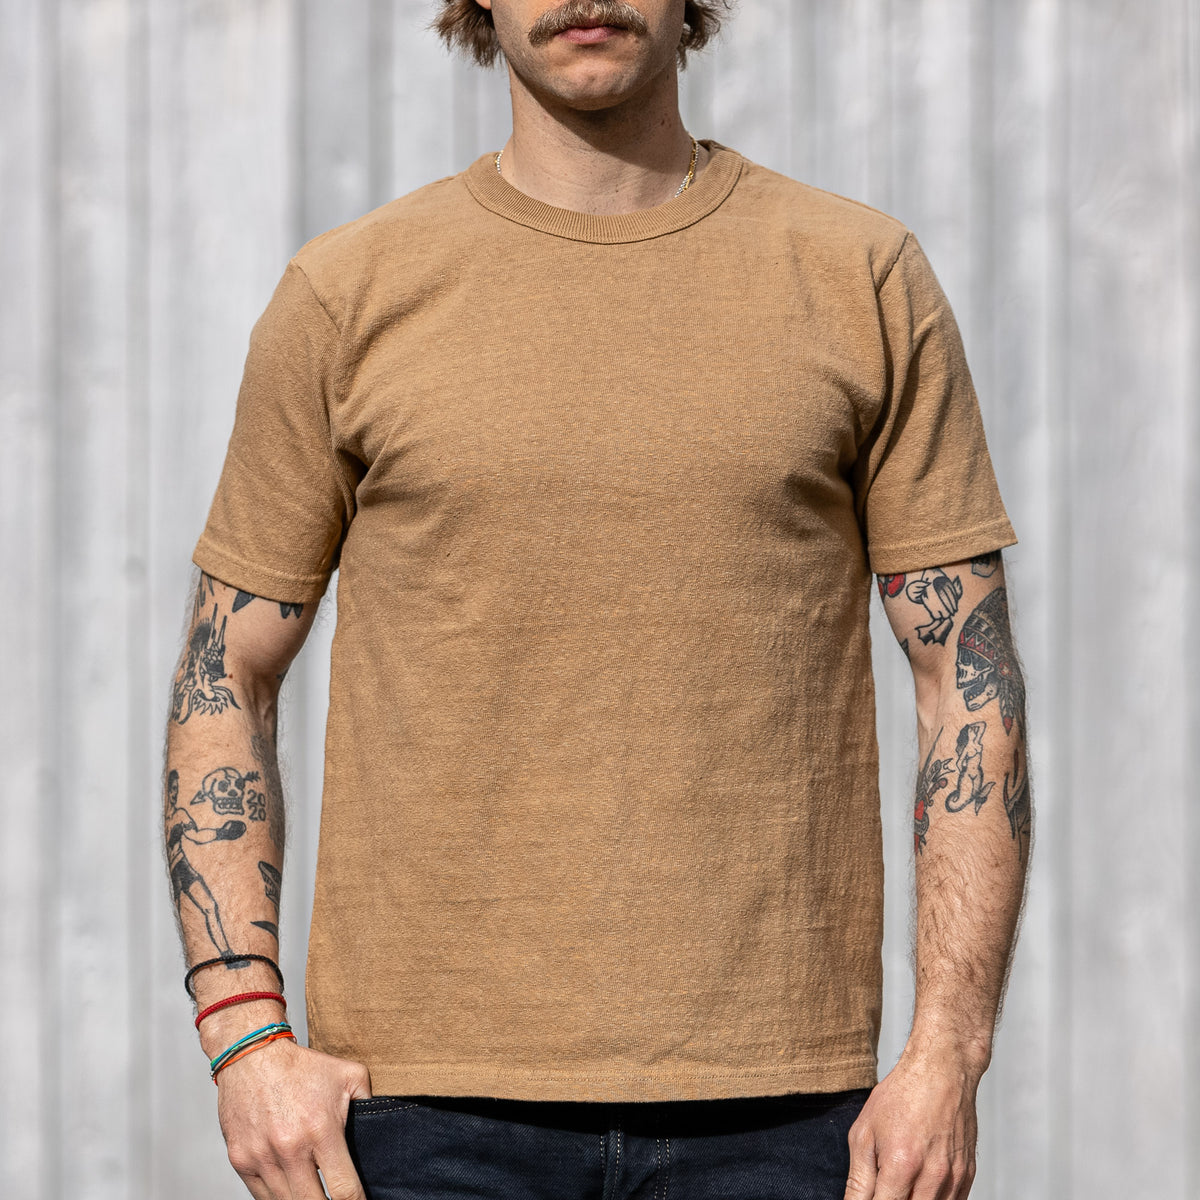 Intro Long Roll-Tab Sleeve Button Front Slub Lyocell Shirt